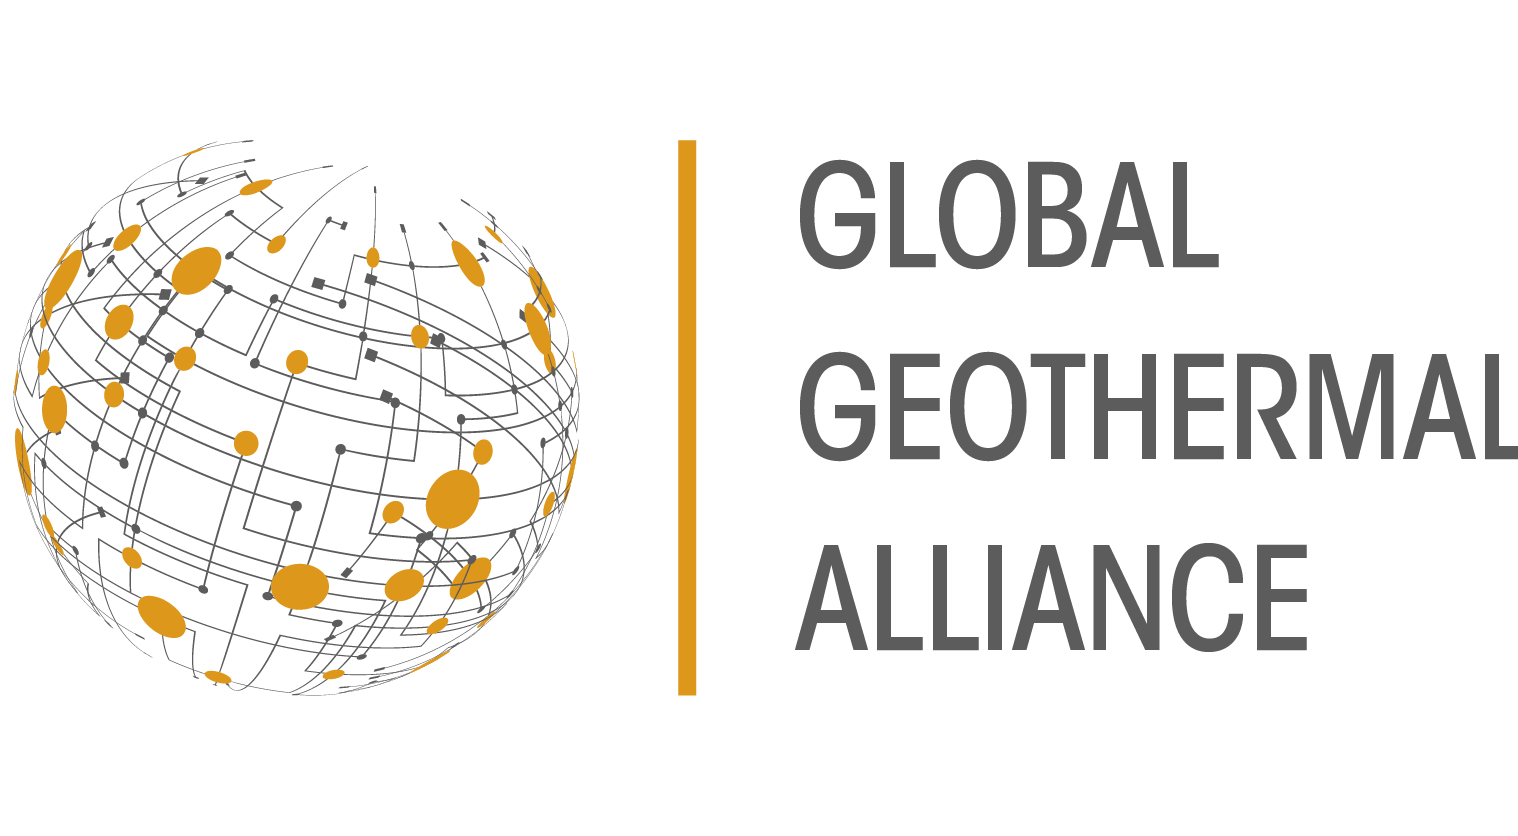 geothermal logo